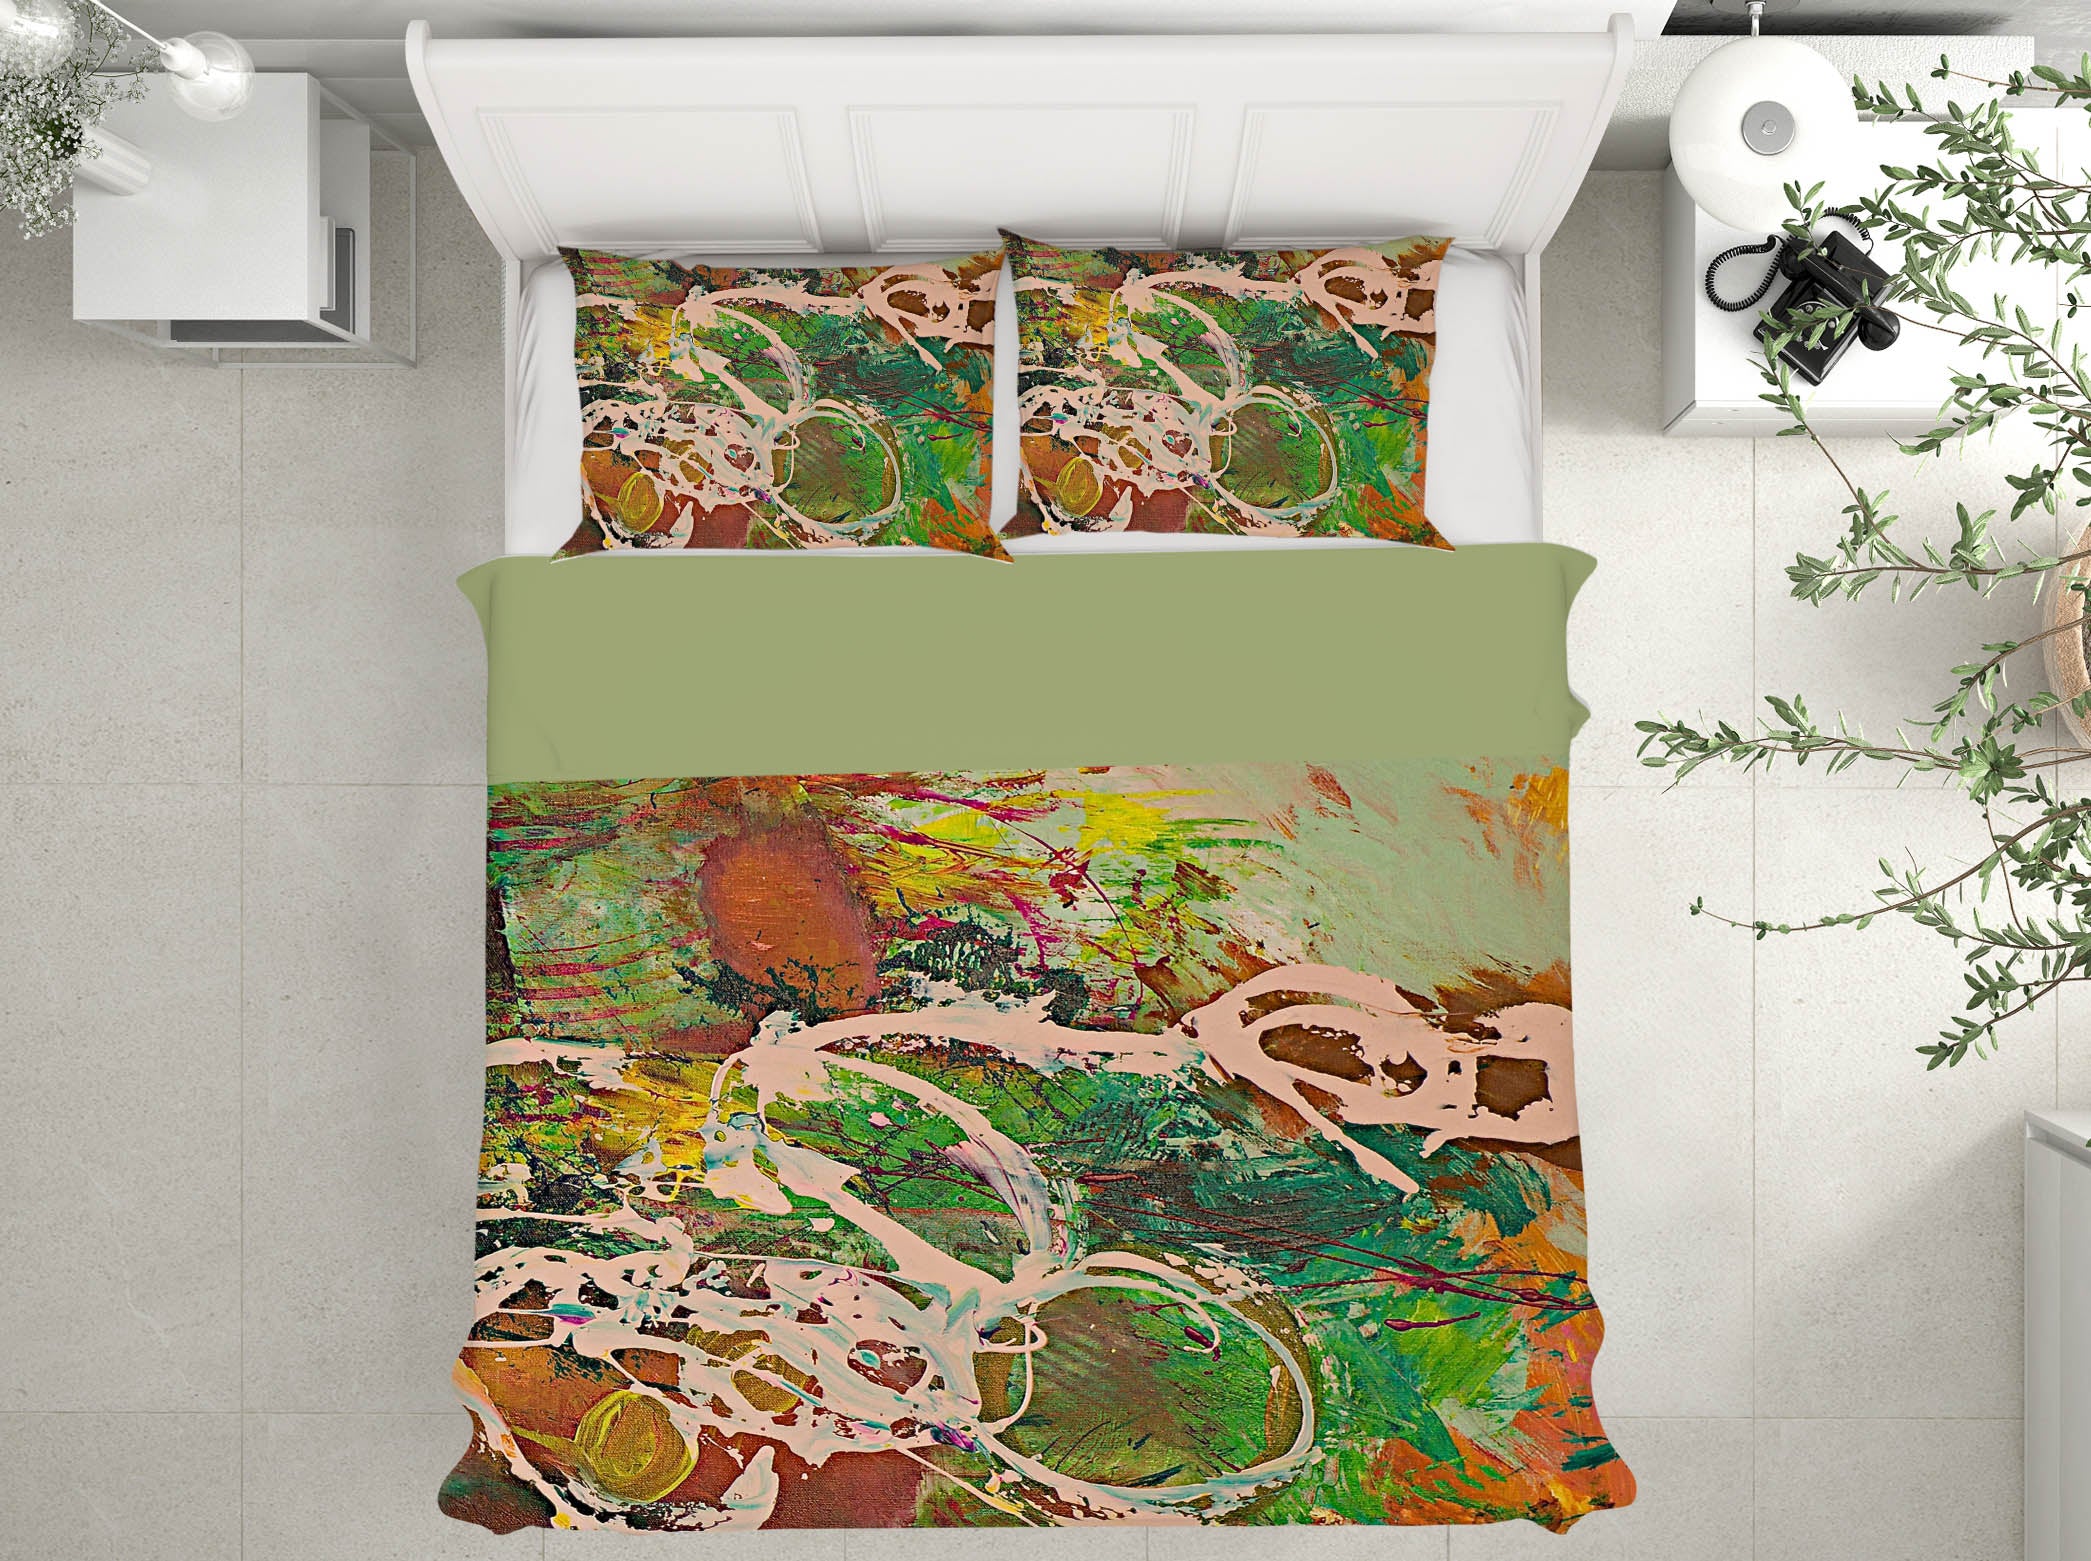 3D Painted Lotus Pond 102 Allan P. Friedlander Bedding Bed Pillowcases Quilt